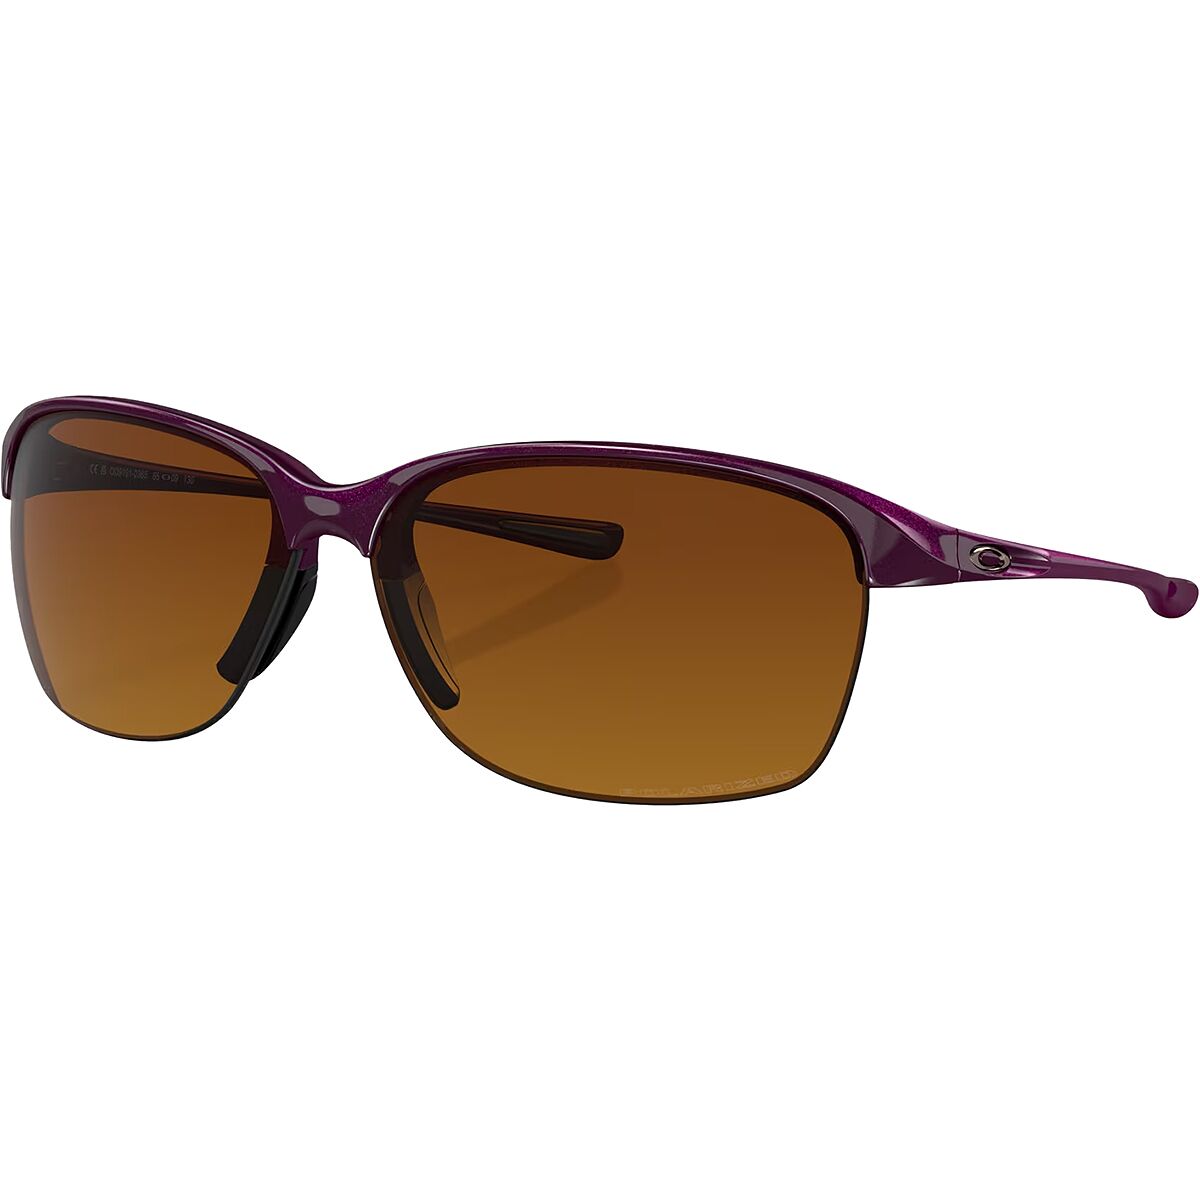 Photos - Sunglasses Oakley Unstoppable Polarized  - Women's 